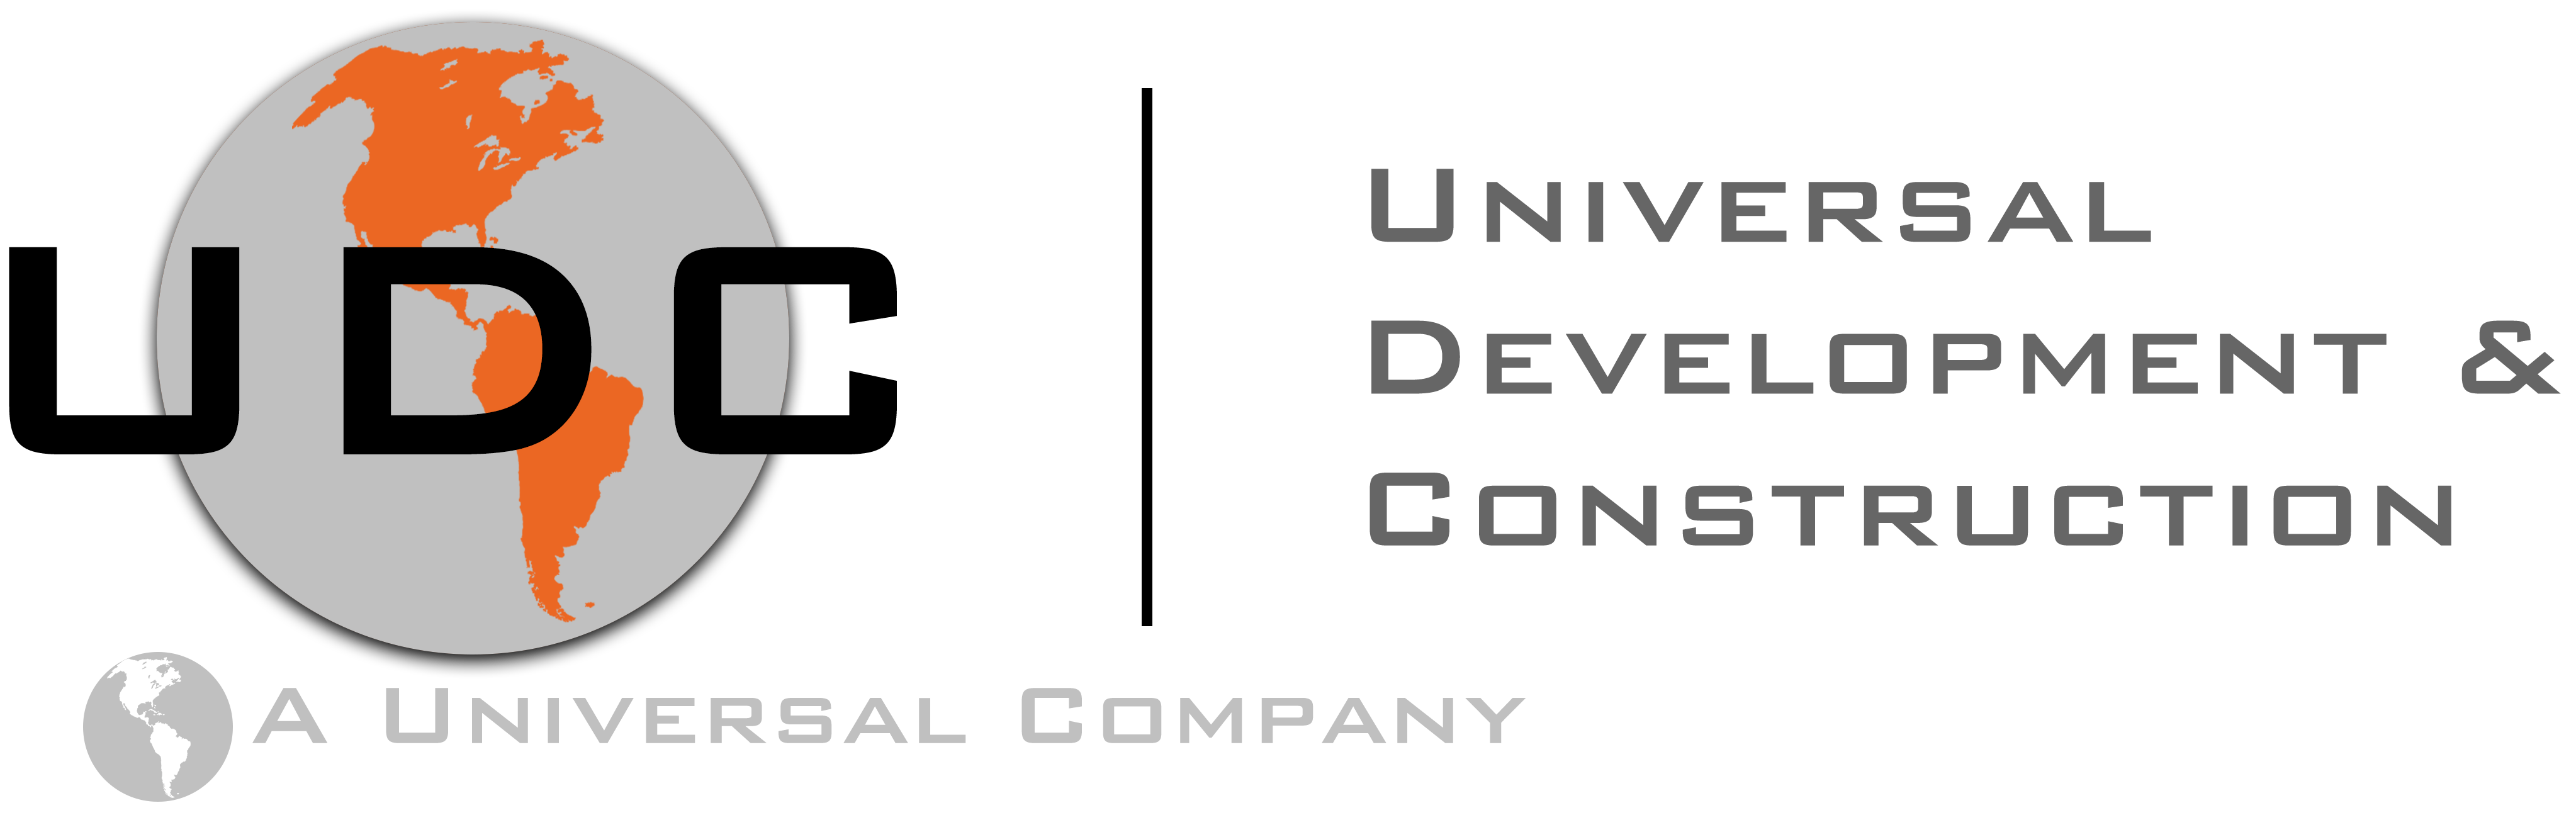 Universal Development & Construction